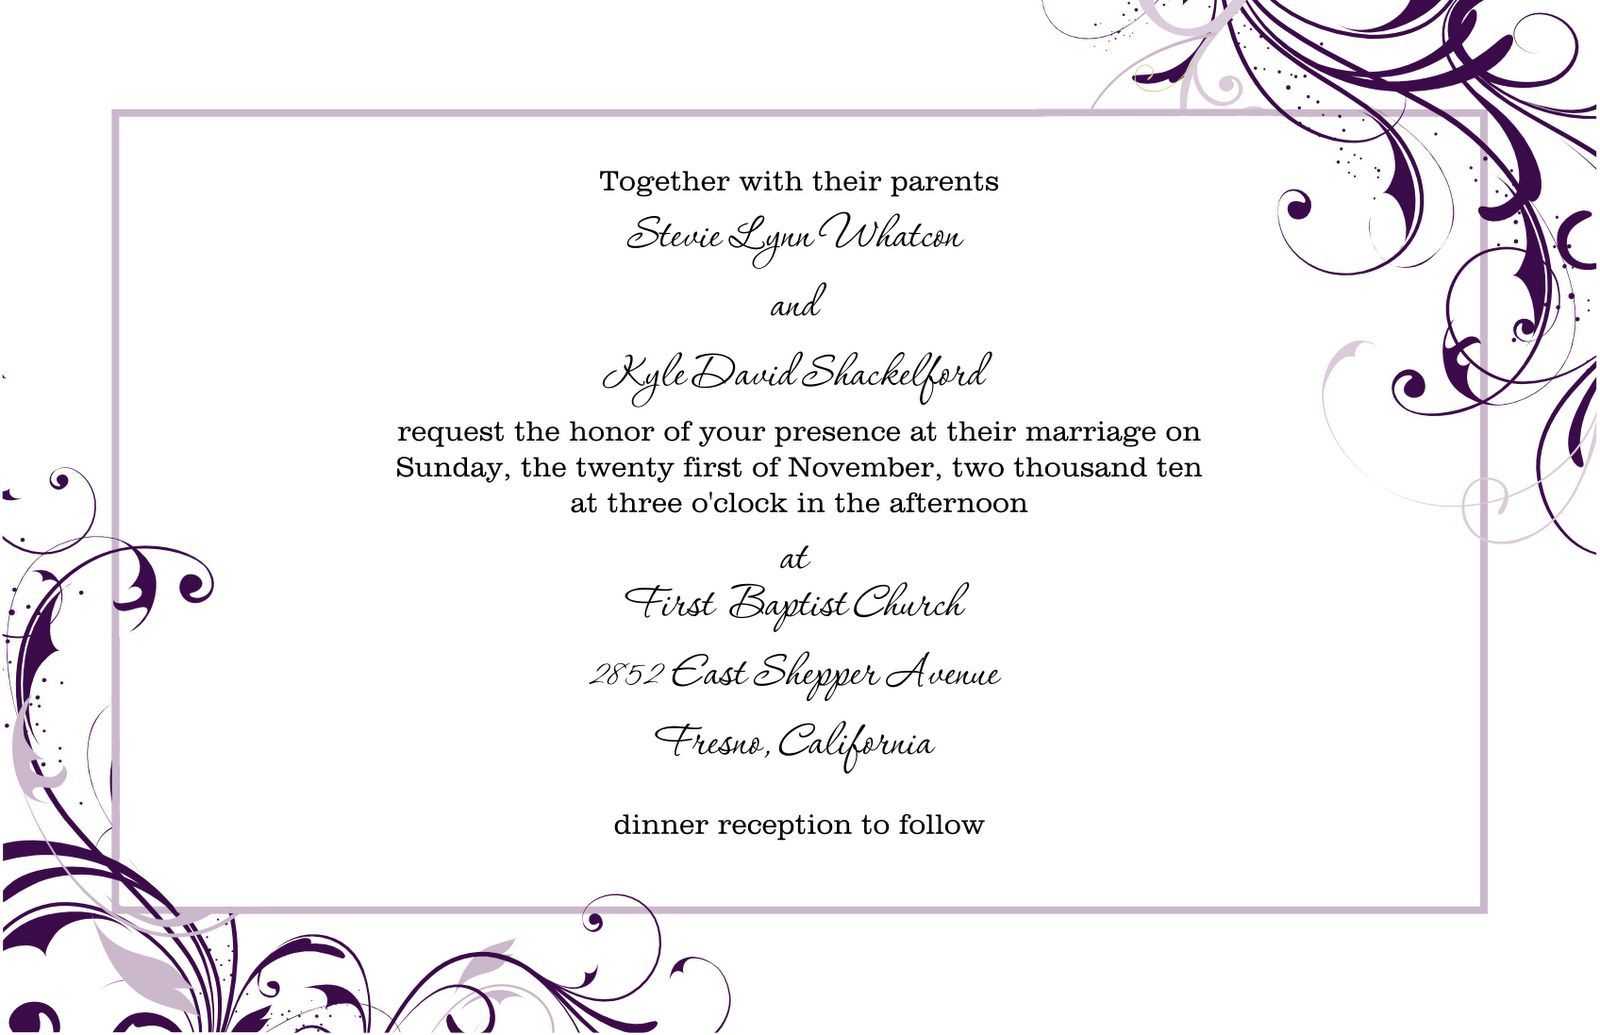 Blank Wedding Invitation Templates For Microsoft Word Inside Free Dinner Invitation Templates For Word